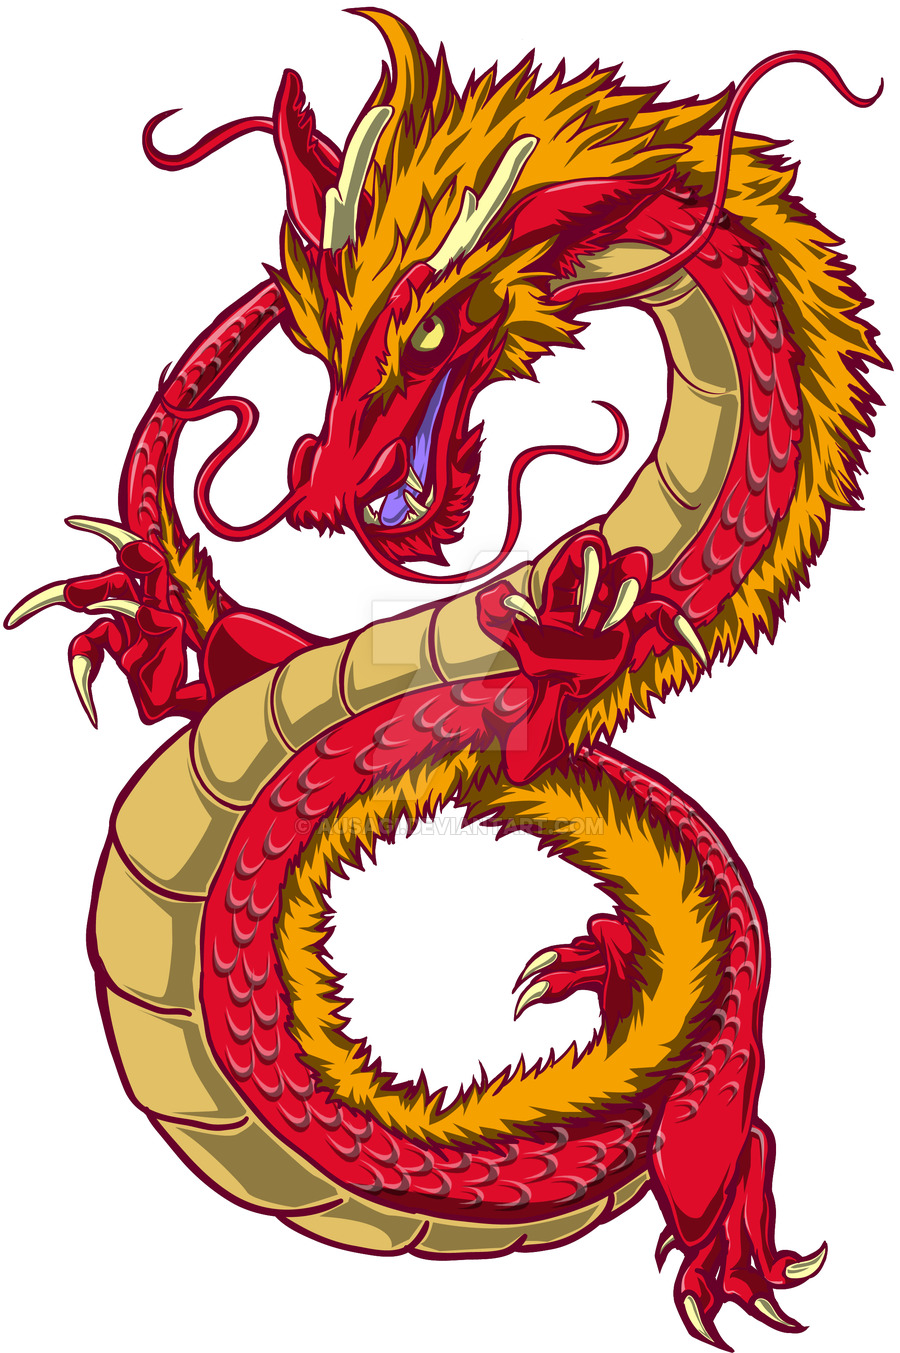 Chinese Dragon by Ausagi on DeviantArt